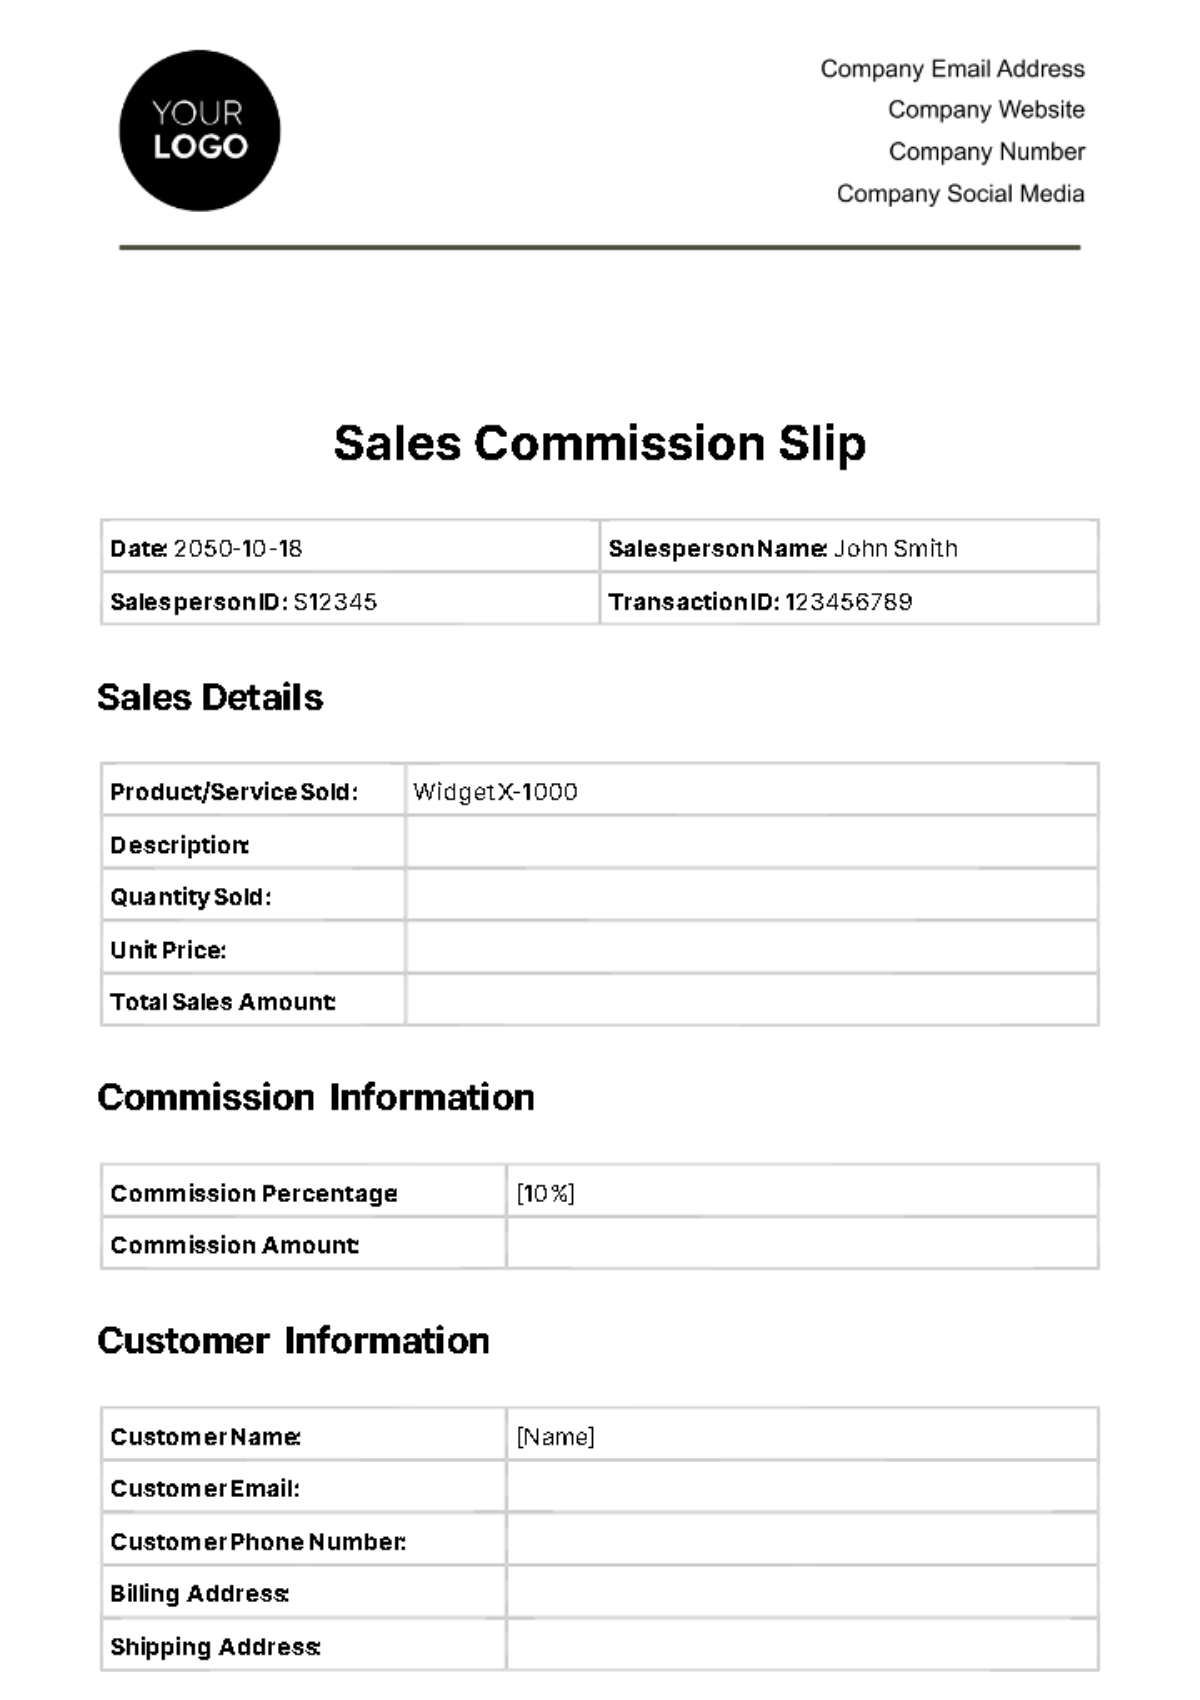 Sales Commission Slip Template